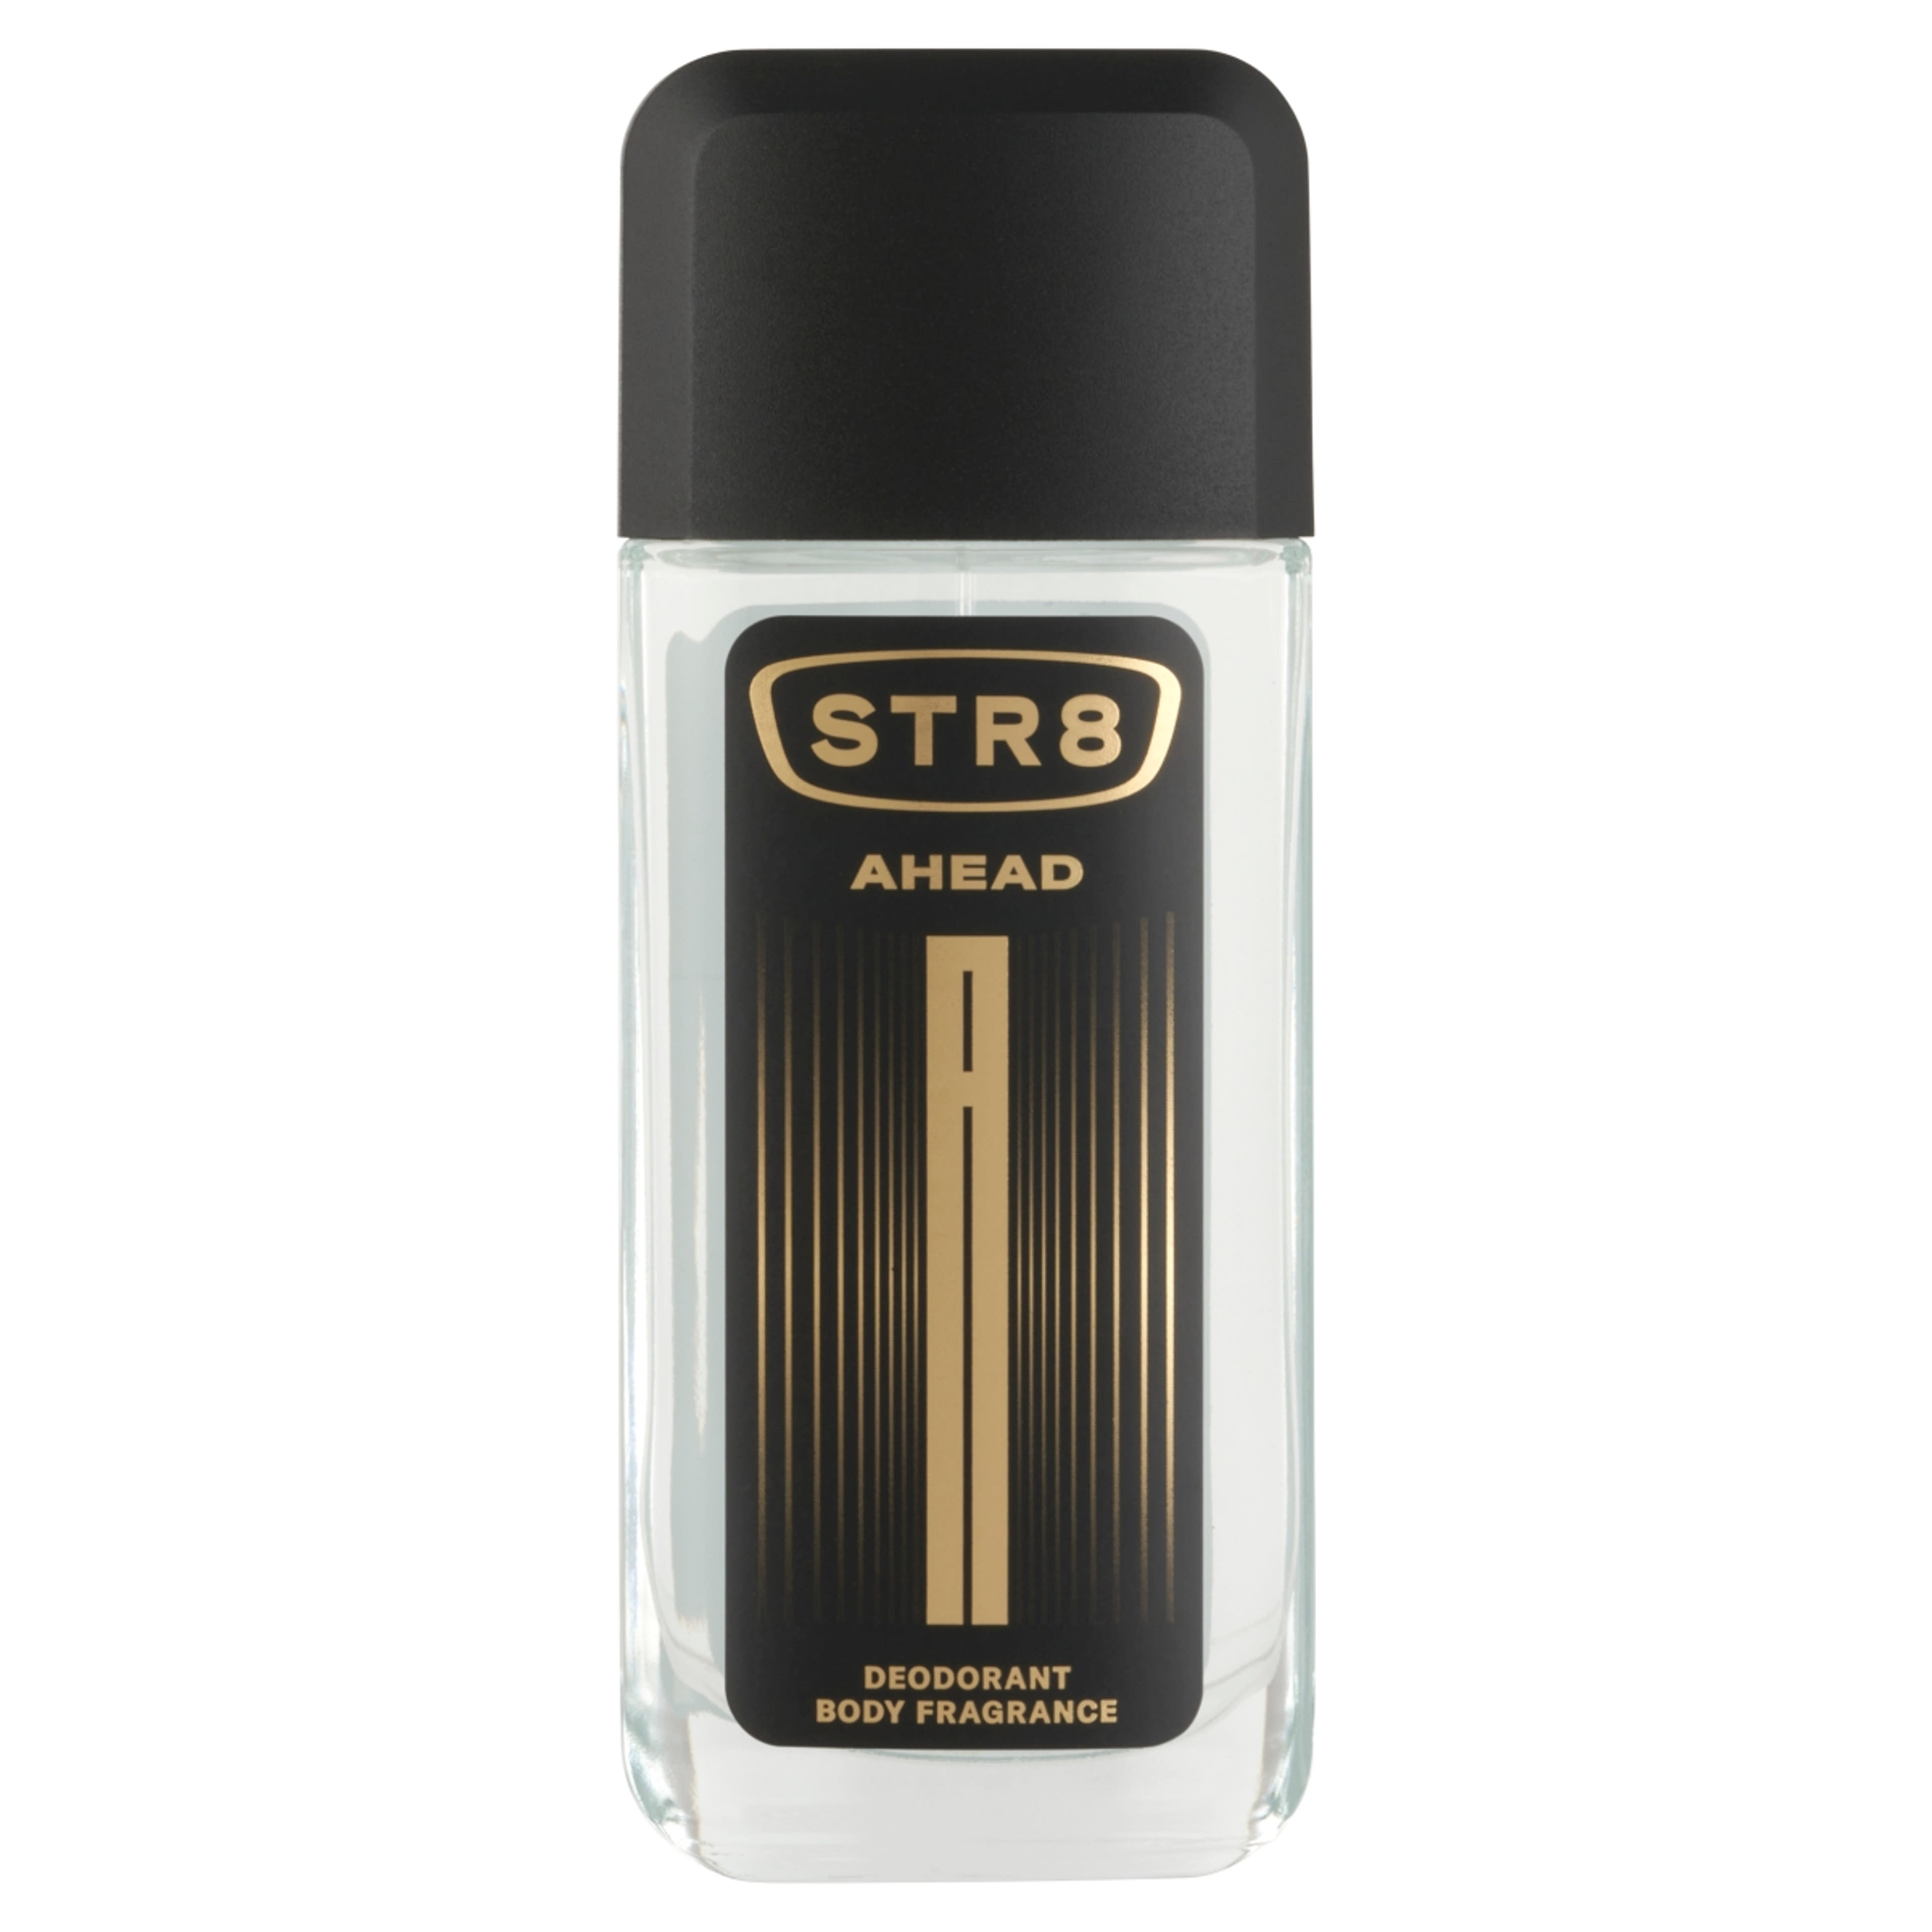 STR8 Ahead parfüm-spray - 85 ml-1